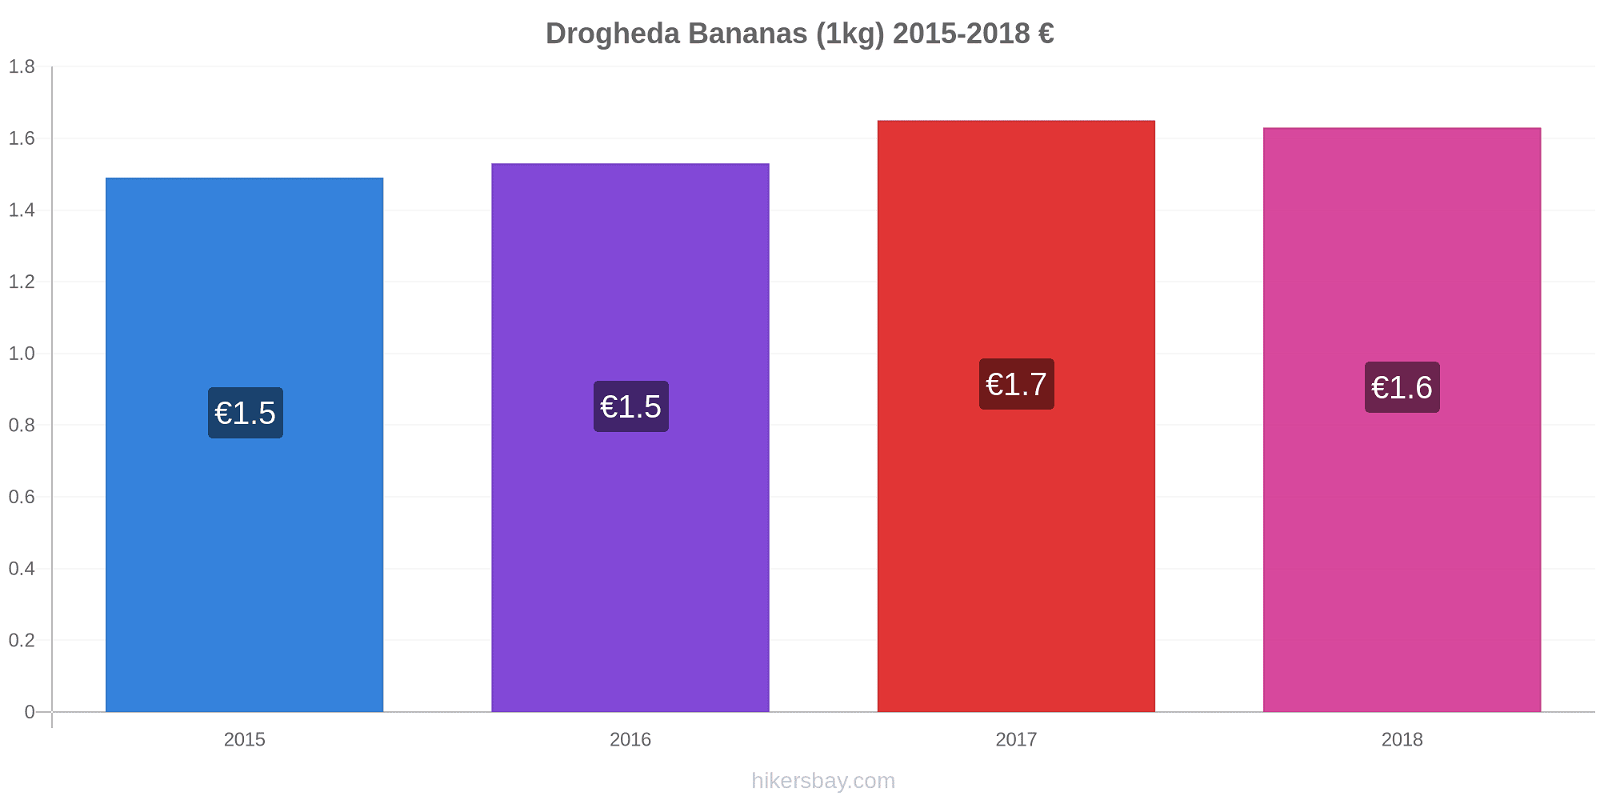 Drogheda price changes Bananas (1kg) hikersbay.com